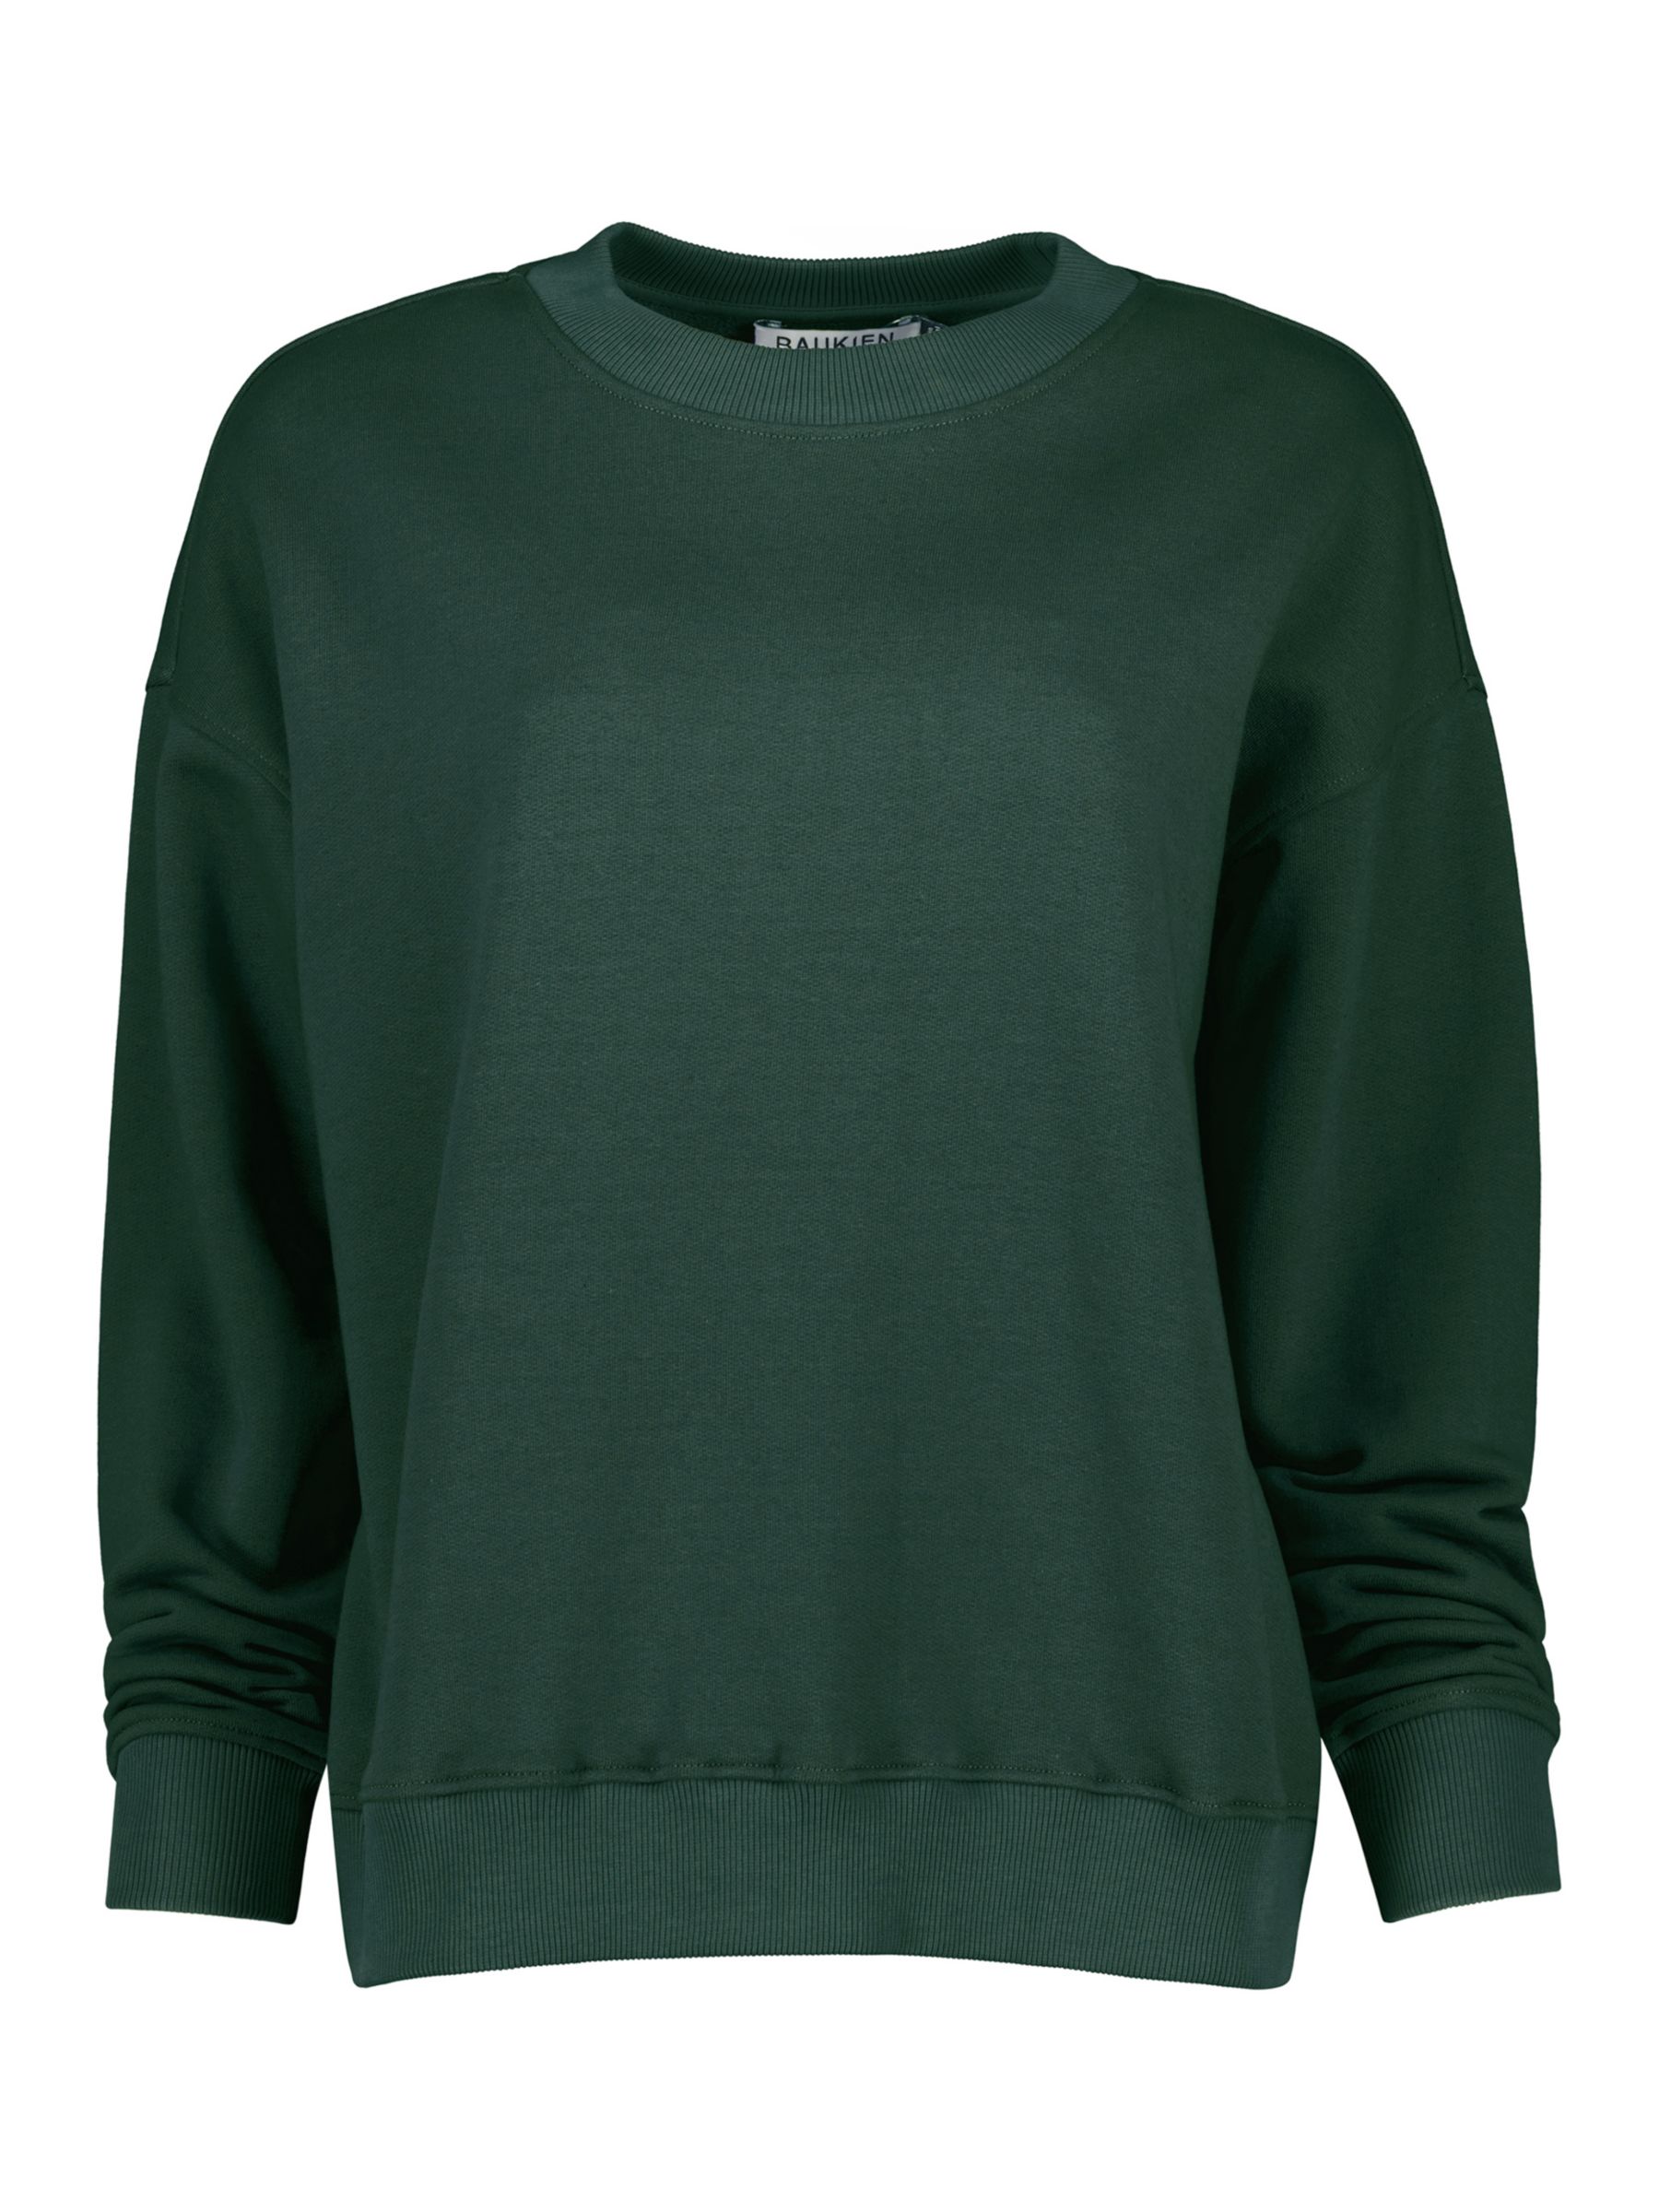 Buy Baukjen Gracie Organic Cotton Blend Sweatshirt, Forest Green Online at johnlewis.com